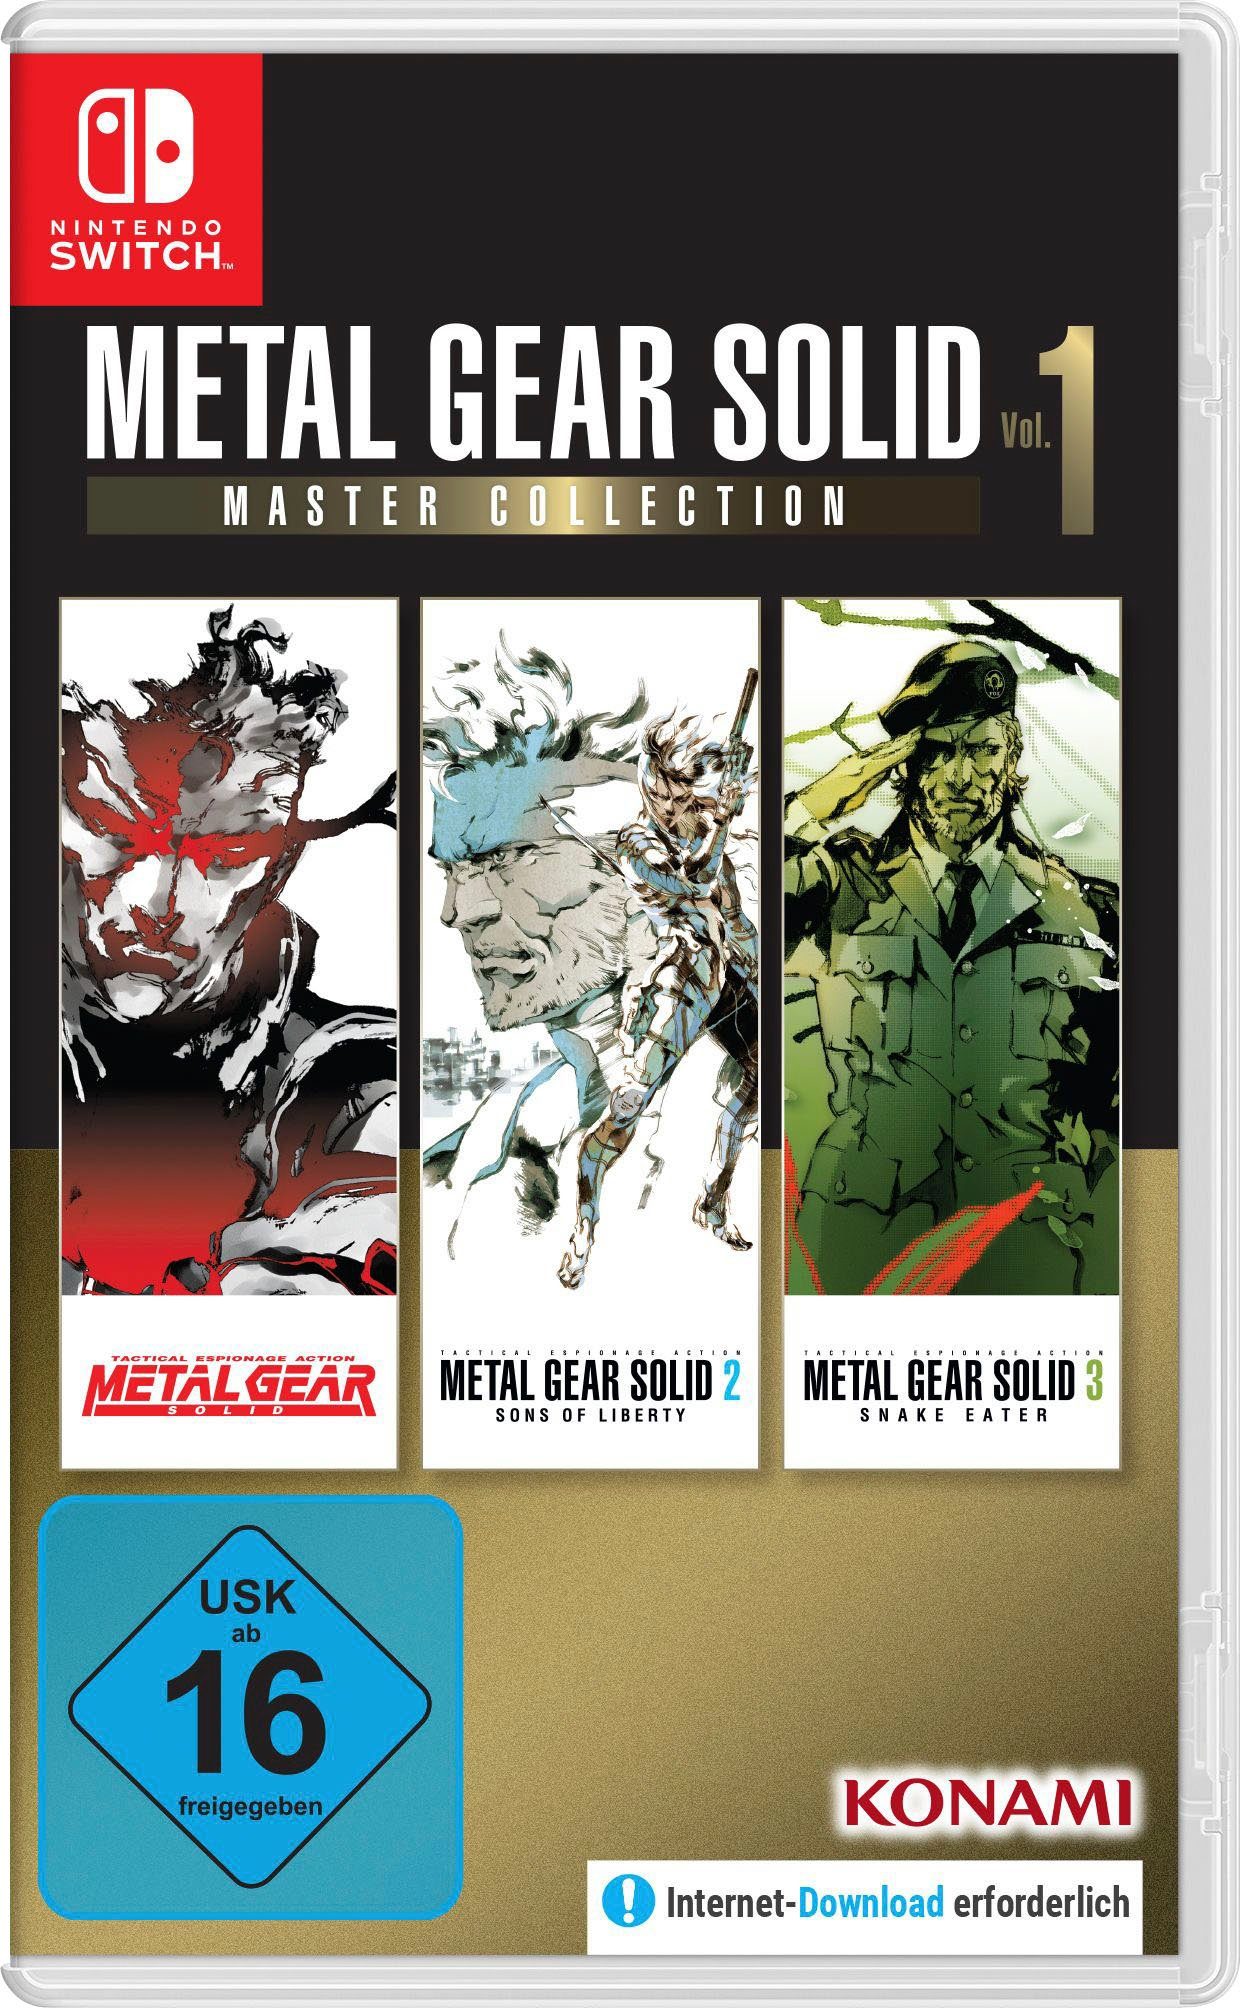 1 Collection Nintendo Konami Master Vol. Solid Gear Metal Switch